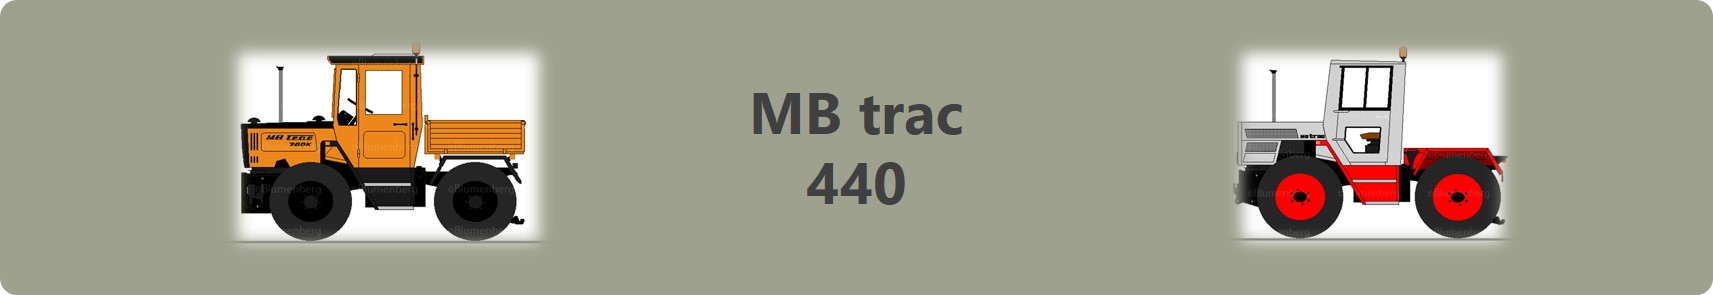 MBtrac440.jpg